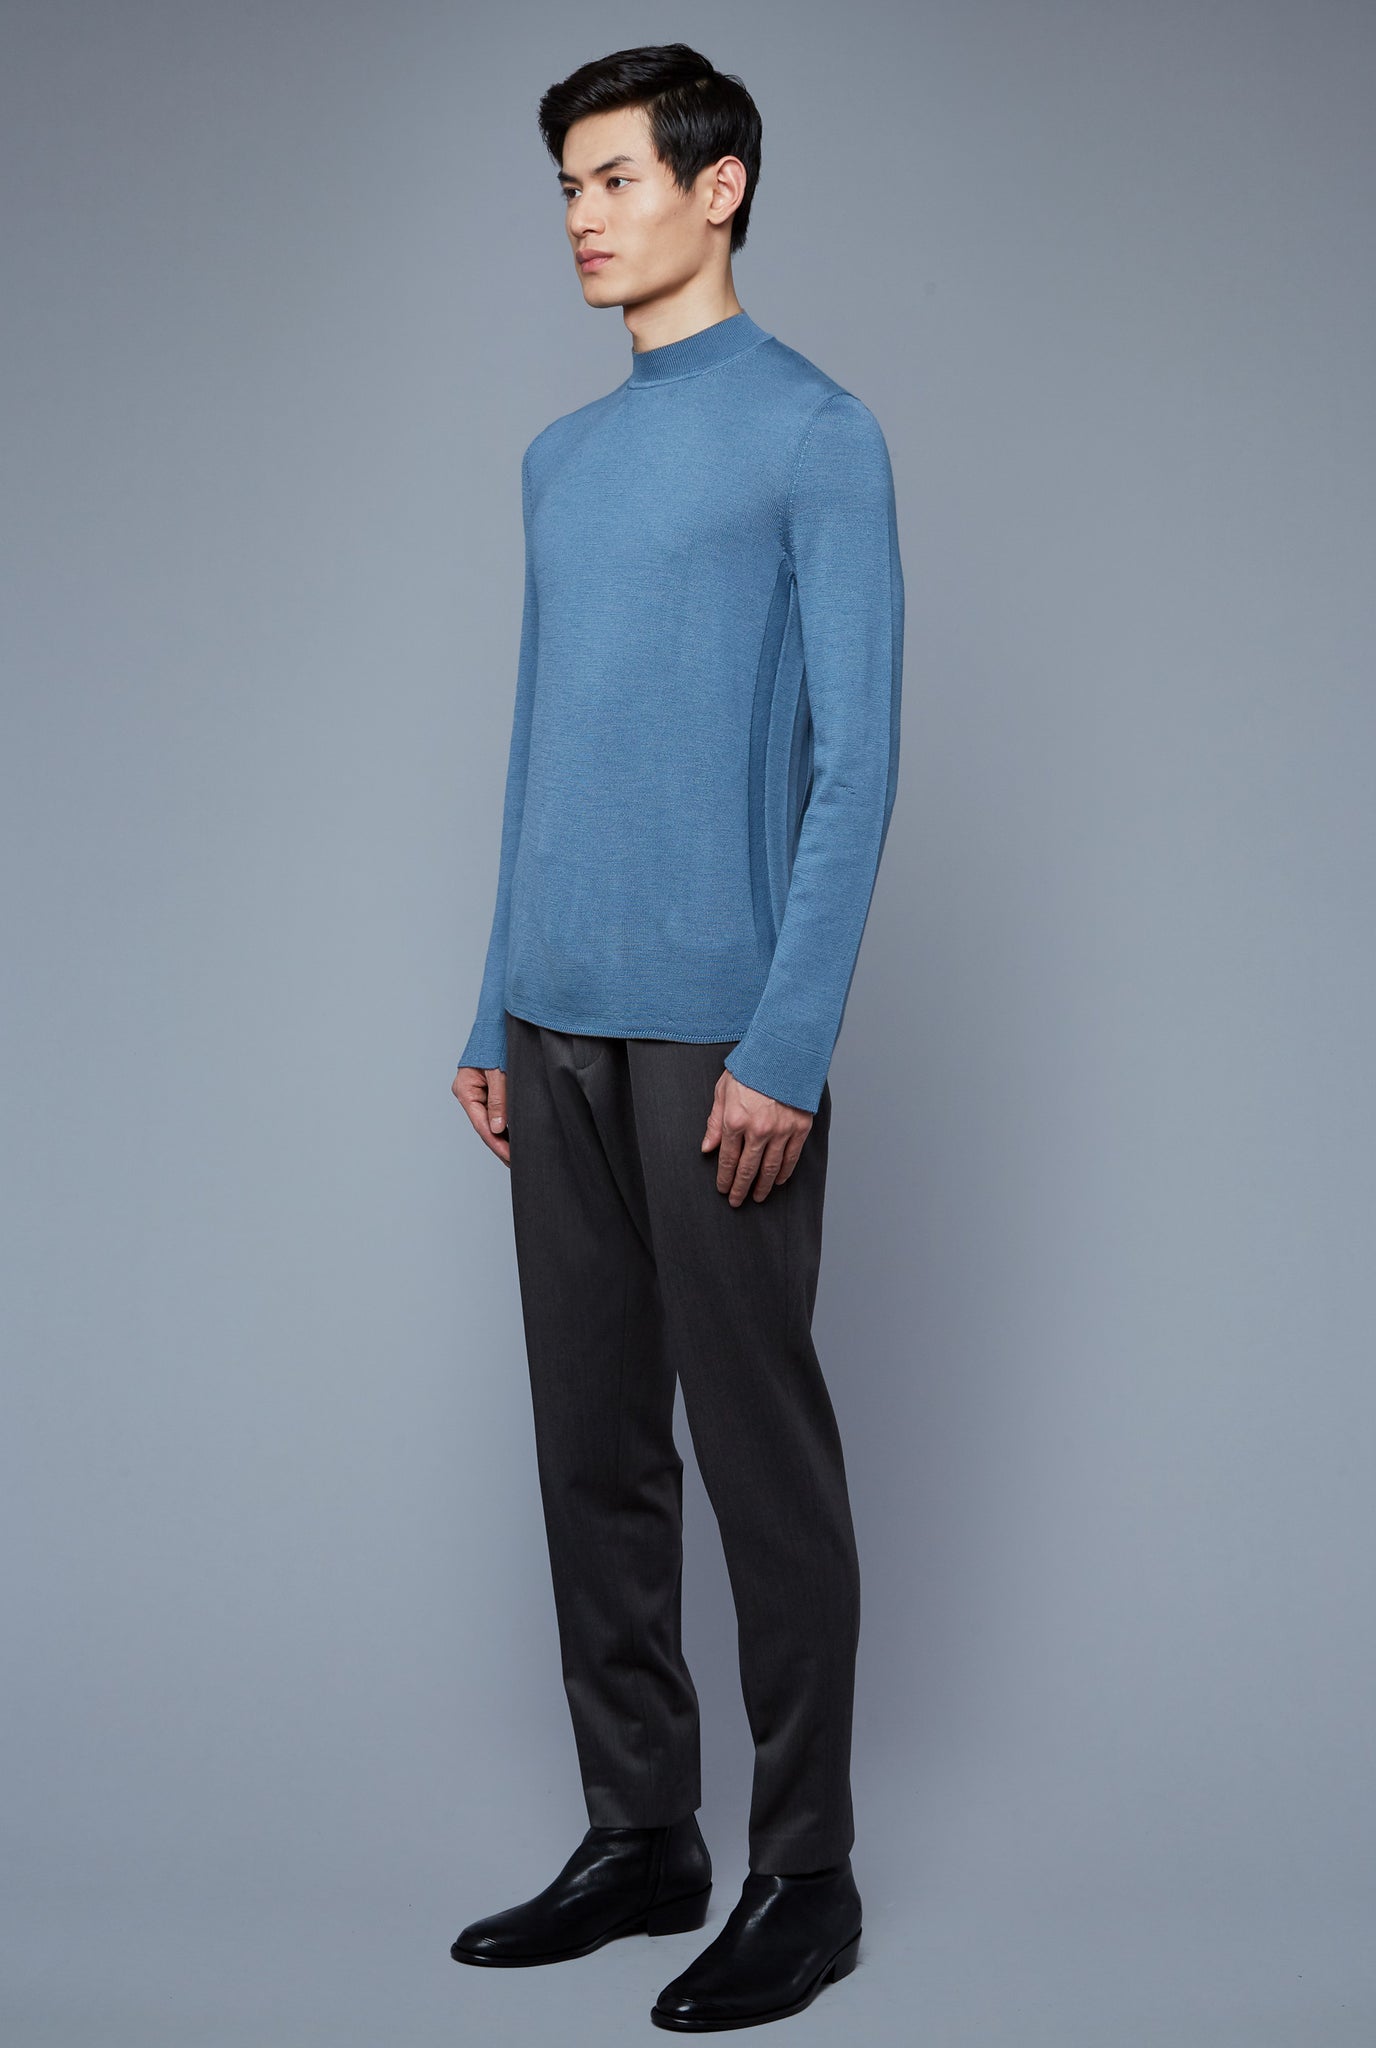 Three Quarter View: Model Qiang Li wearing Royal Neck Sweater Tee